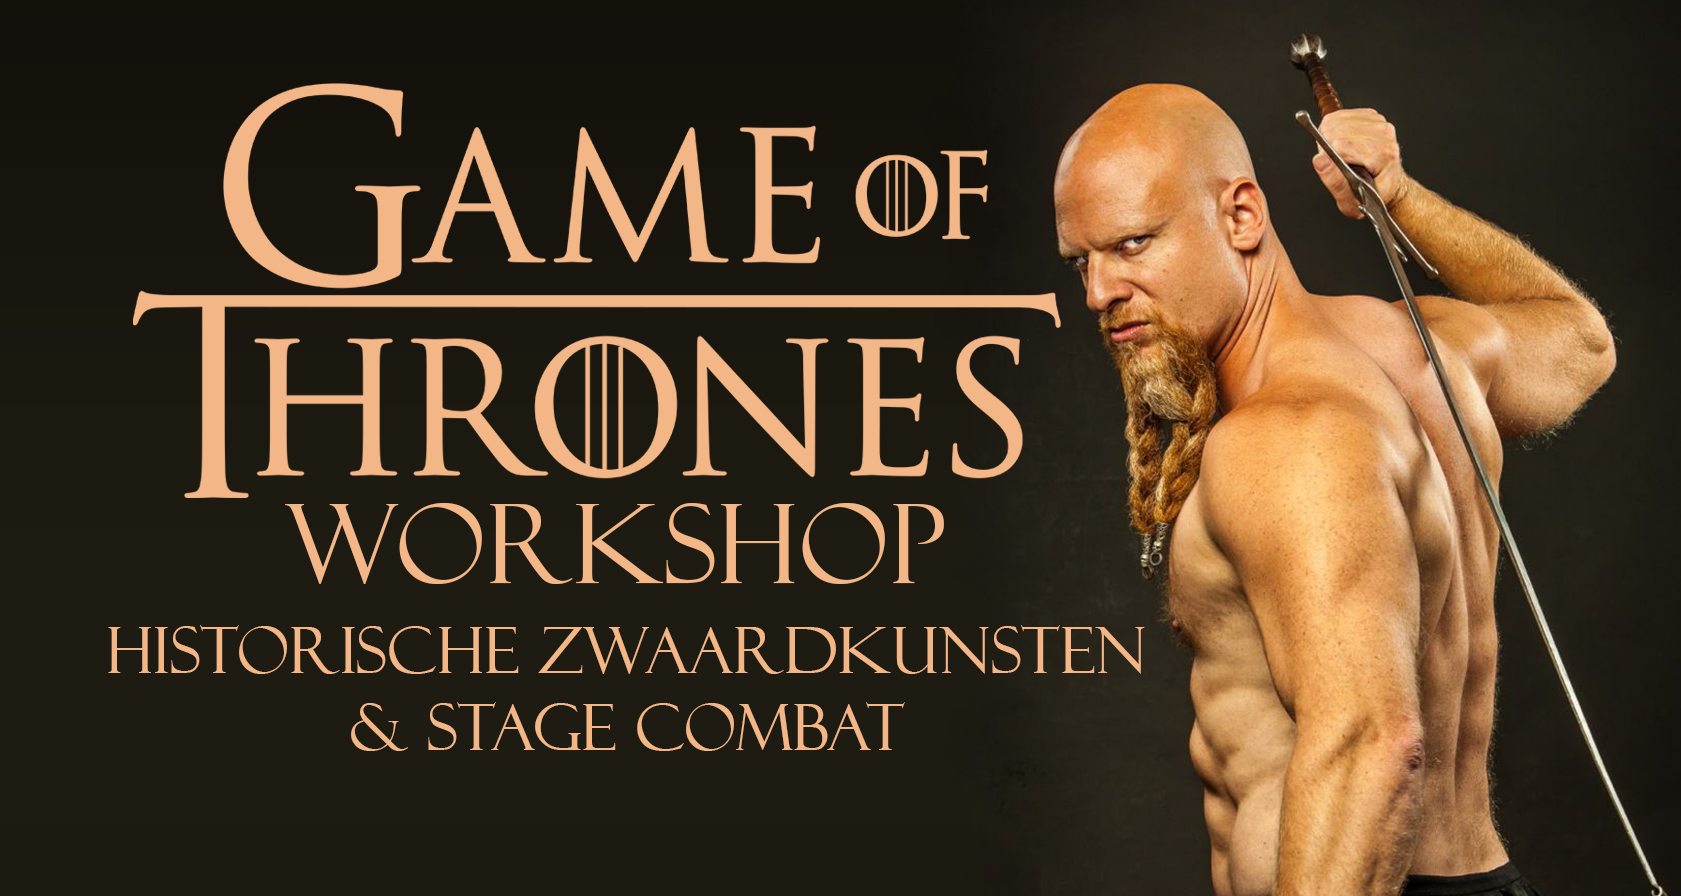 Personeelsuitje Haarlem: Game Of Thrones zwaardkunst workshop Haarlem